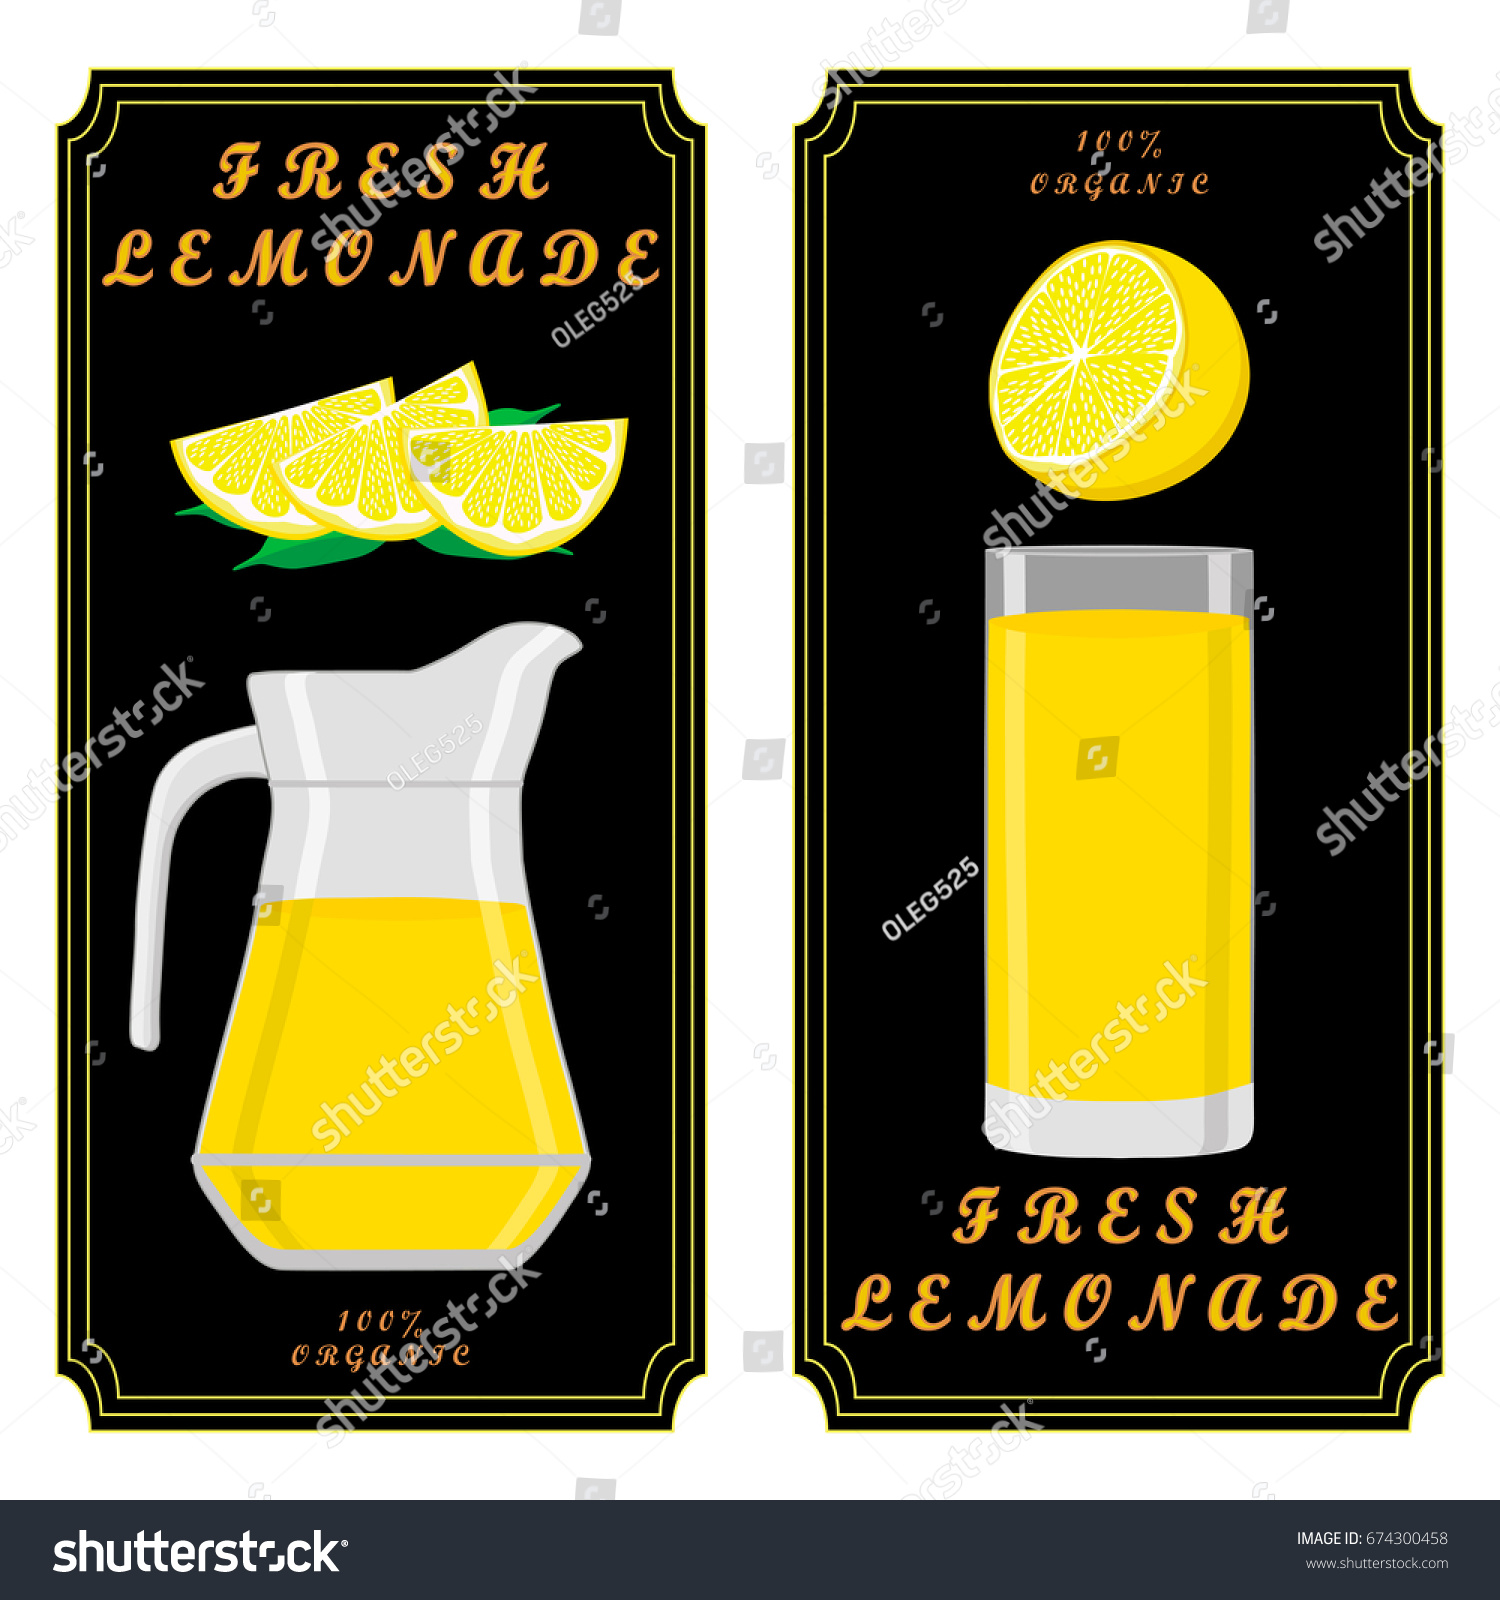 Download Vector Icon Illustration Logo Yellow Jug Stock Vector Royalty Free 674300458 PSD Mockup Templates